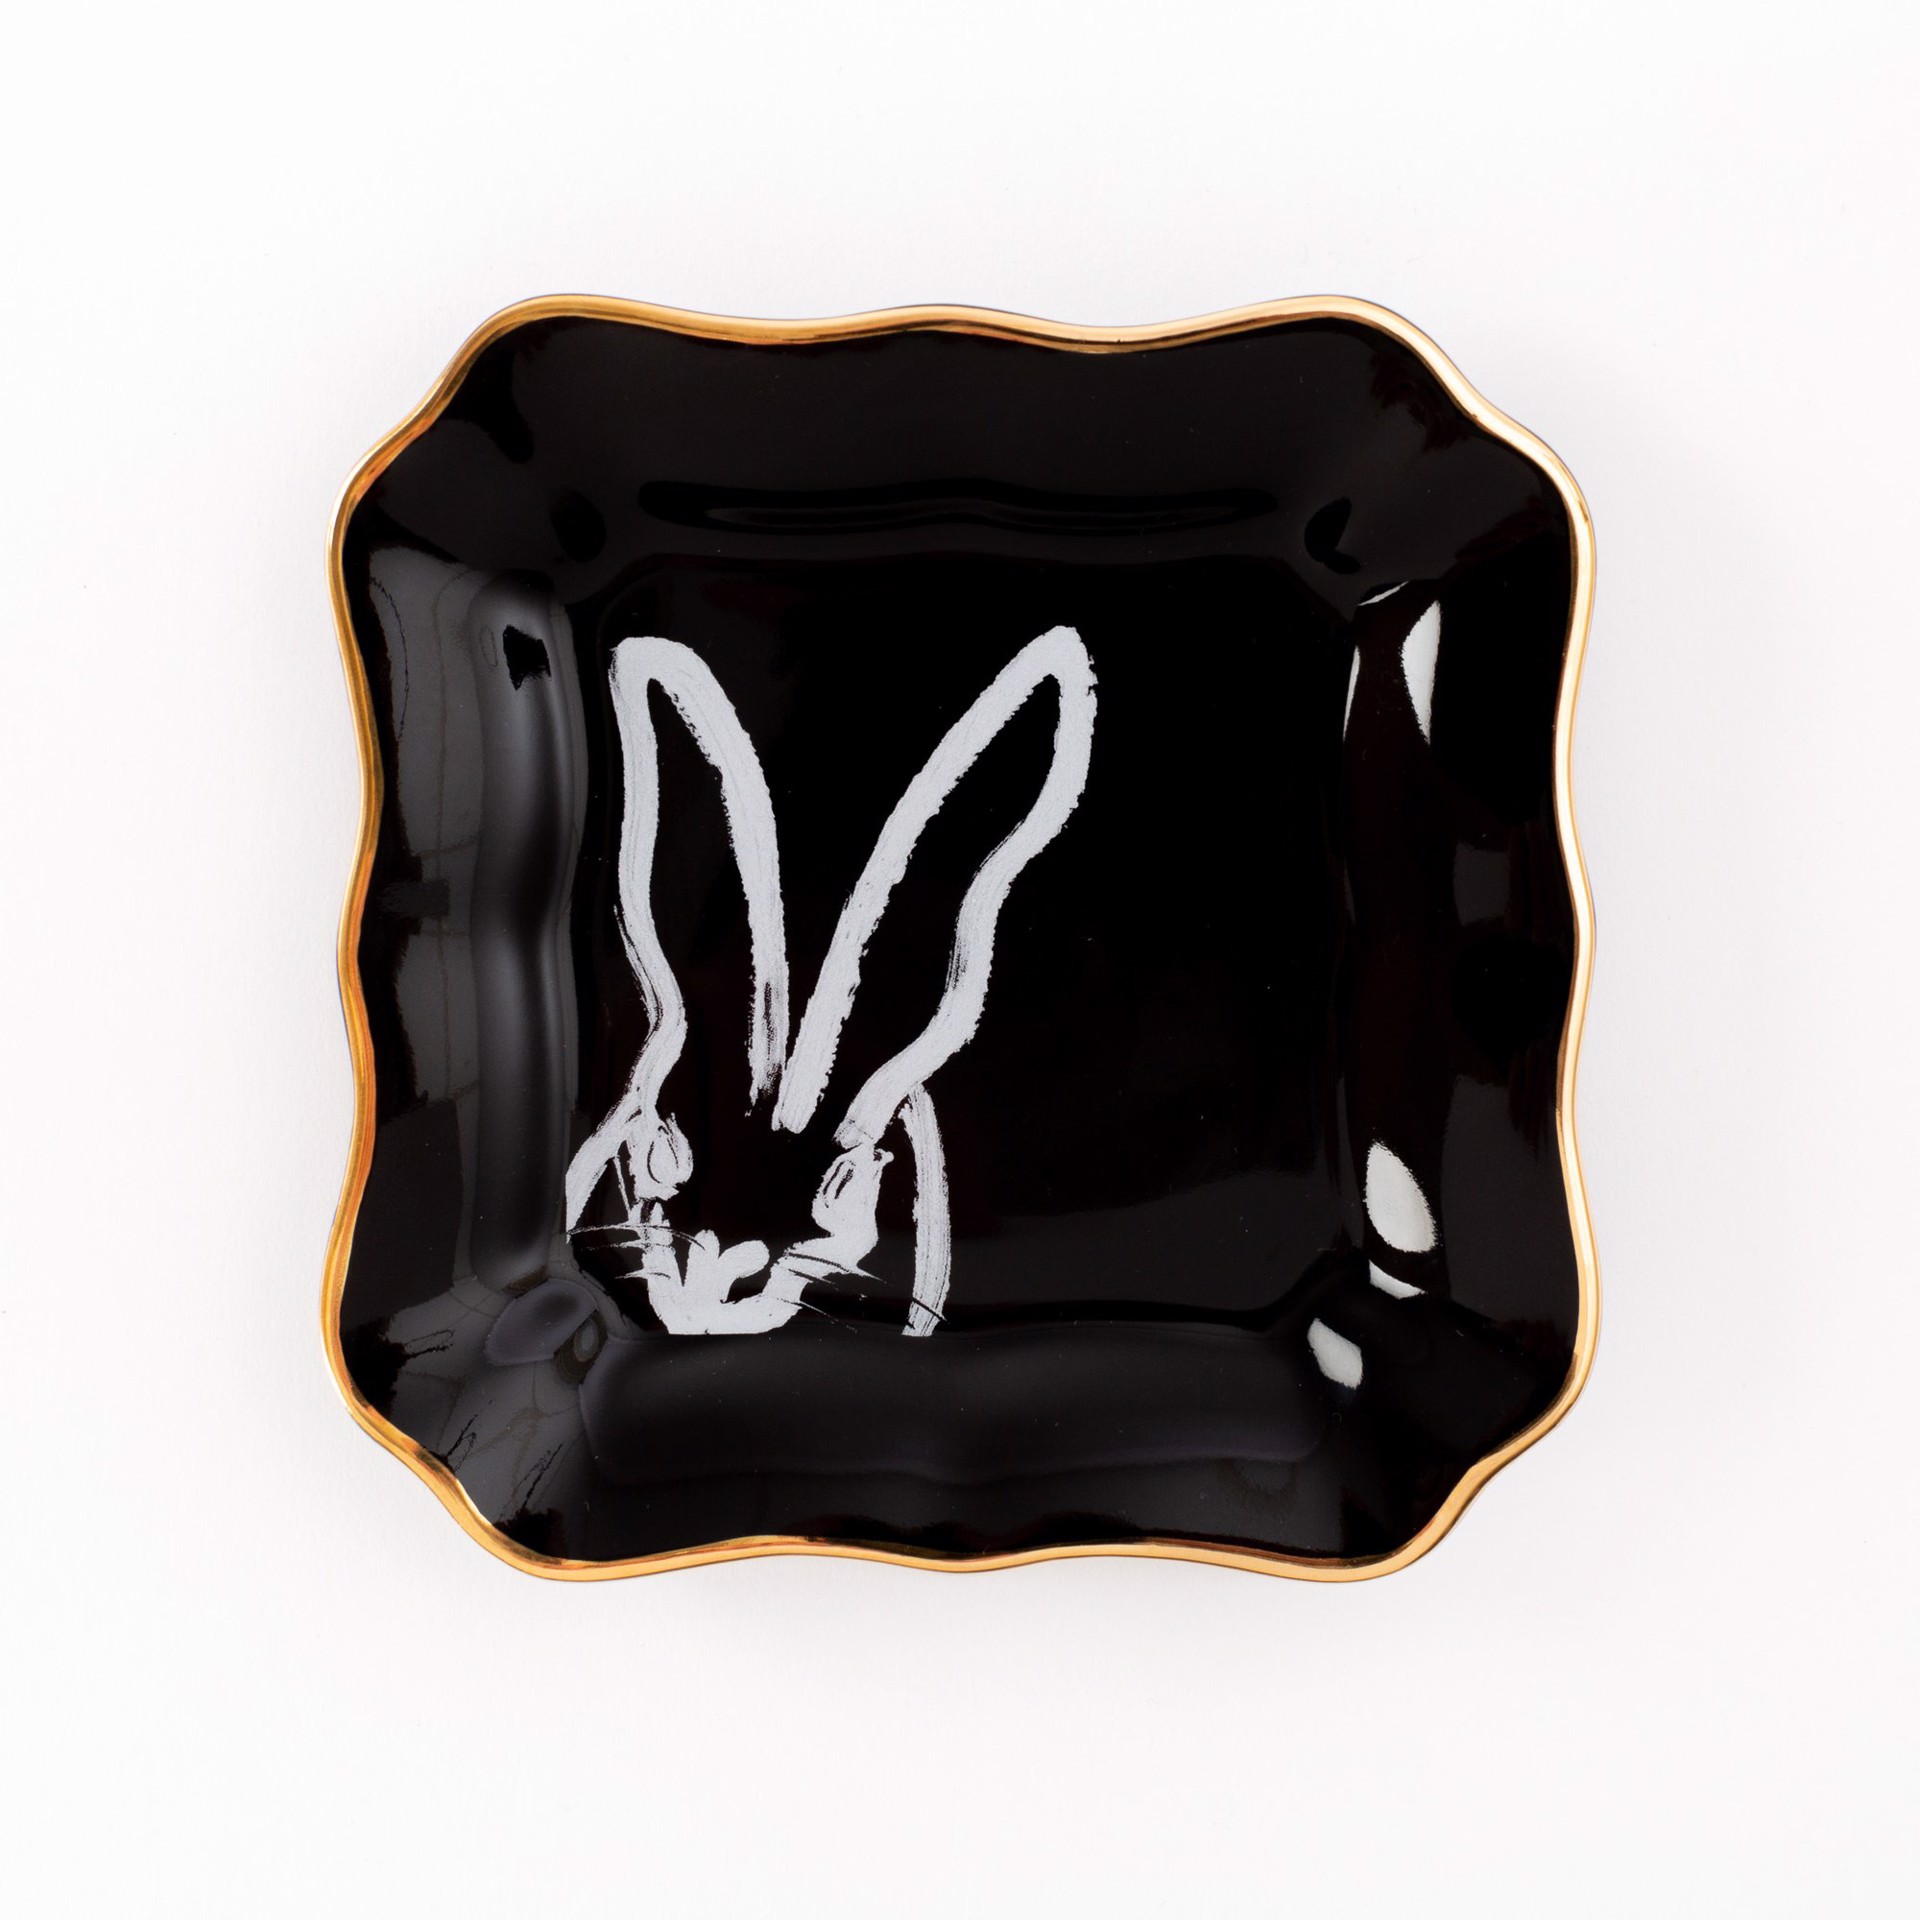 Bunny Portrait Plates: Black with Gold by Hunt Slonem